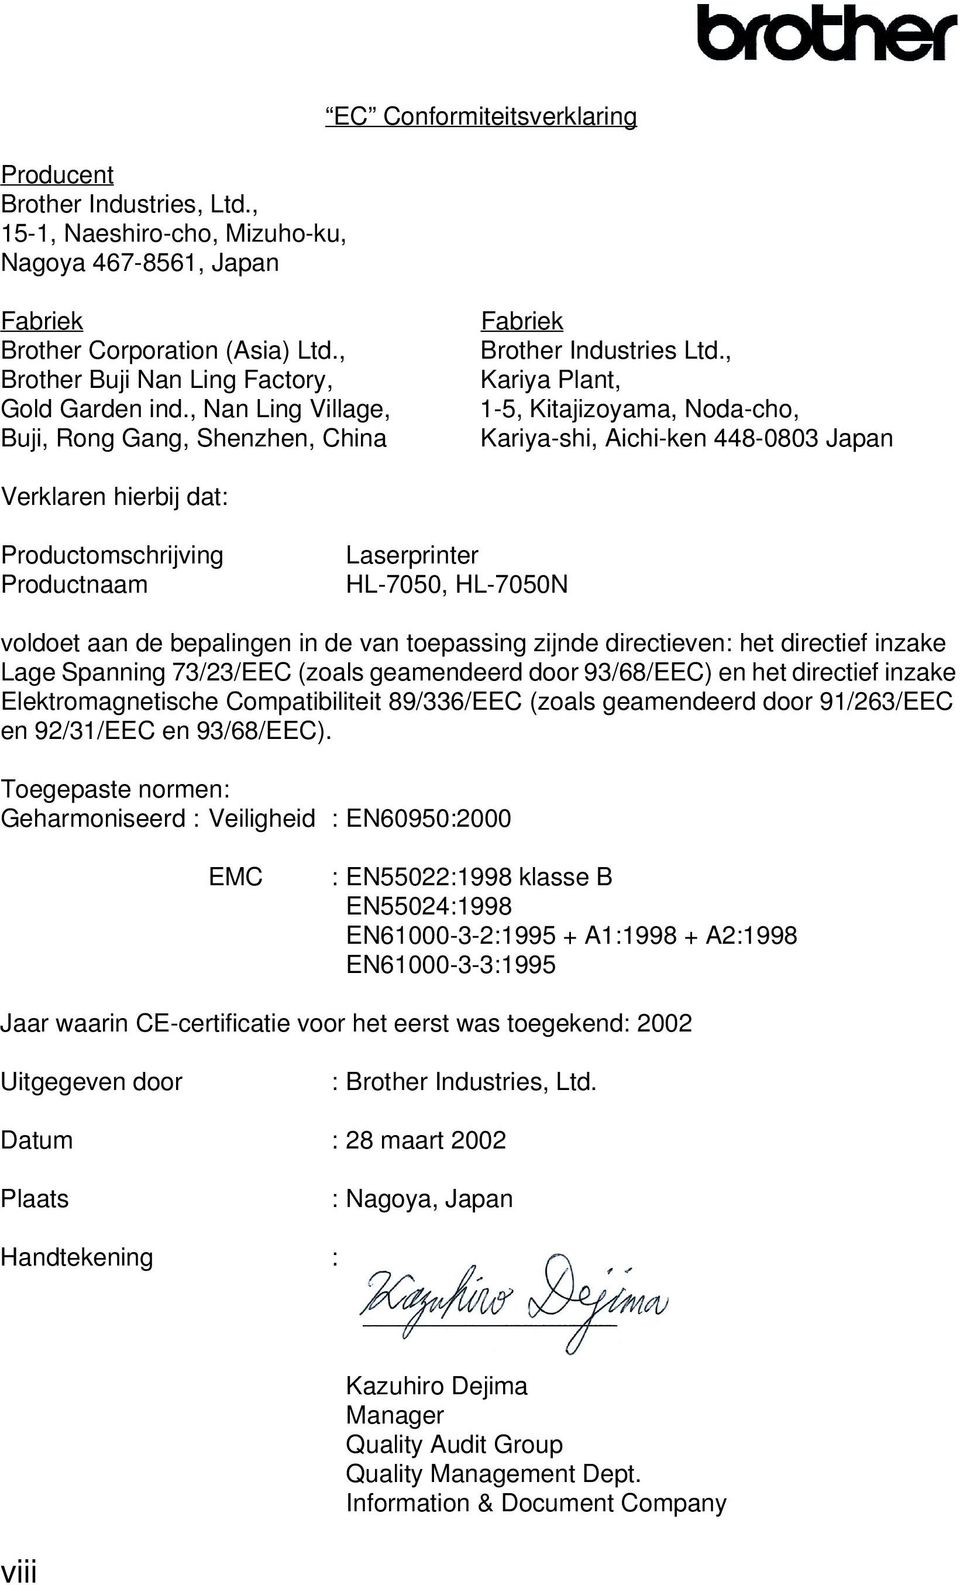 , Kariya Plant, 1-5, Kitajizoyama, Noda-cho, Kariya-shi, Aichi-ken 448-0803 Japan Verklaren hierbij dat: Productomschrijving Productnaam Laserprinter HL-7050, HL-7050N voldoet aan de bepalingen in de